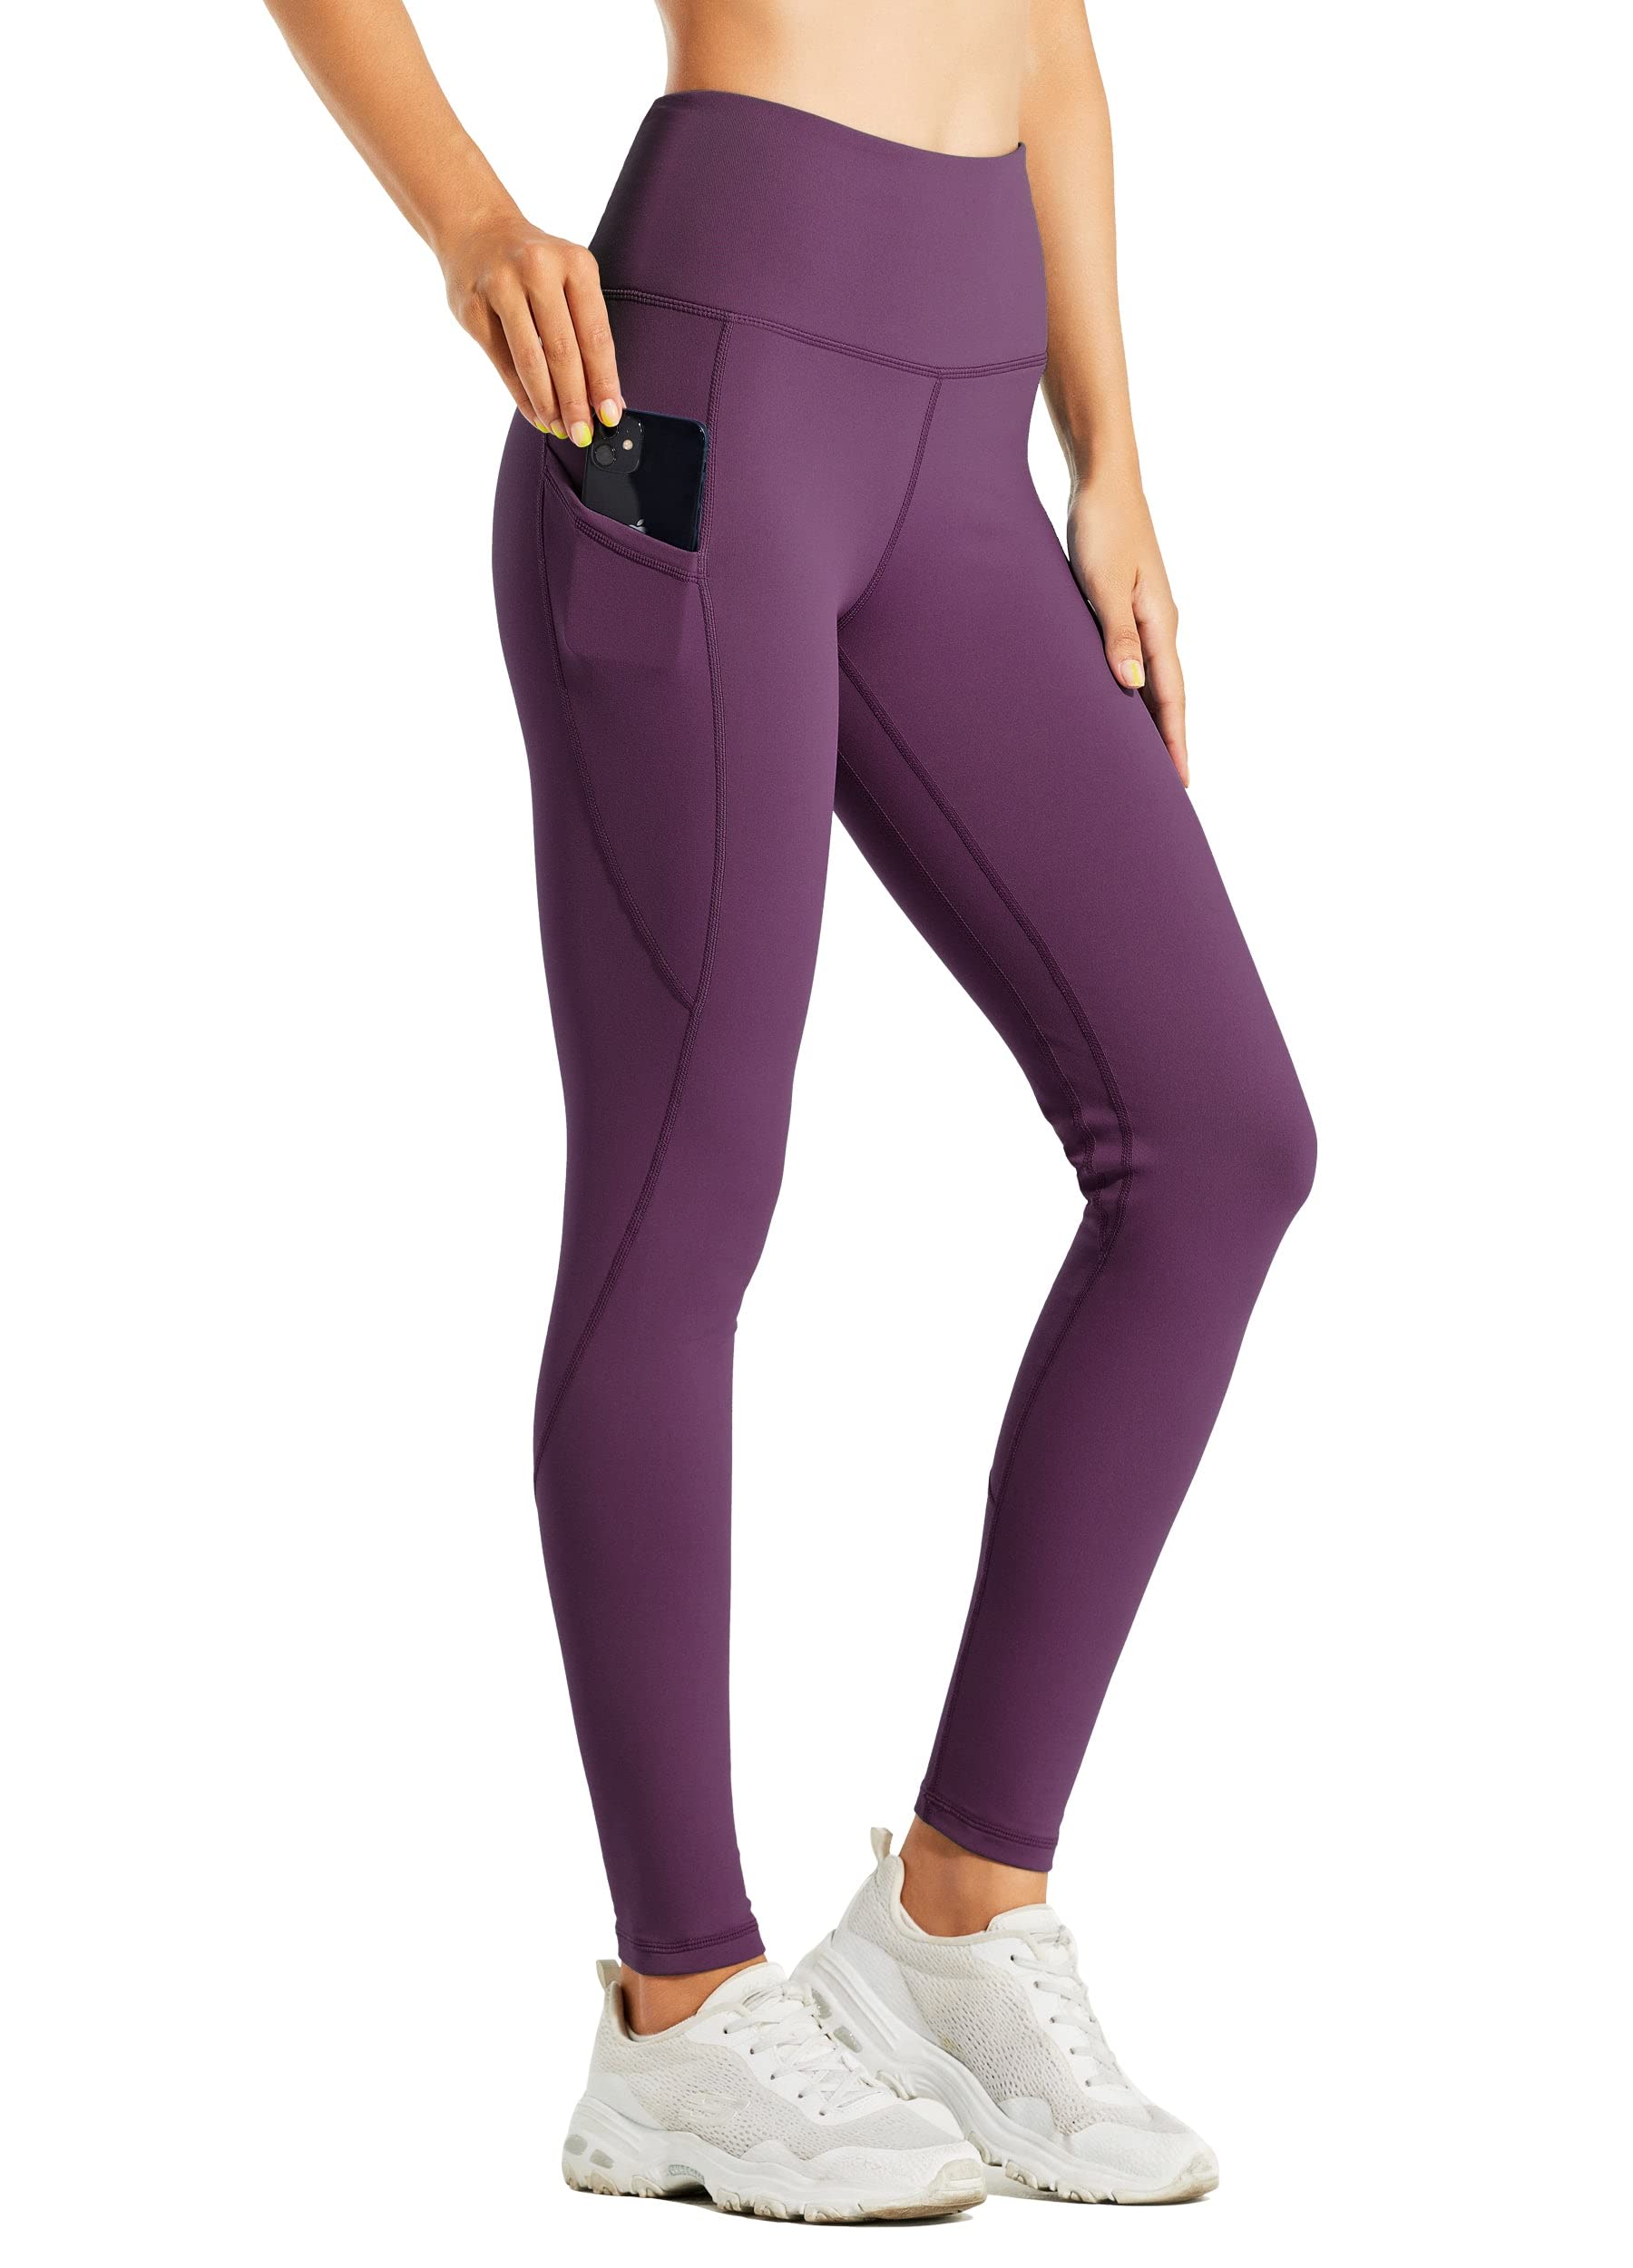 Willit Women's Fleece Lined Leggings Water Resistant Thermal Winter Pants  Hiking Yoga Running Tights High Waisted Purple Medium